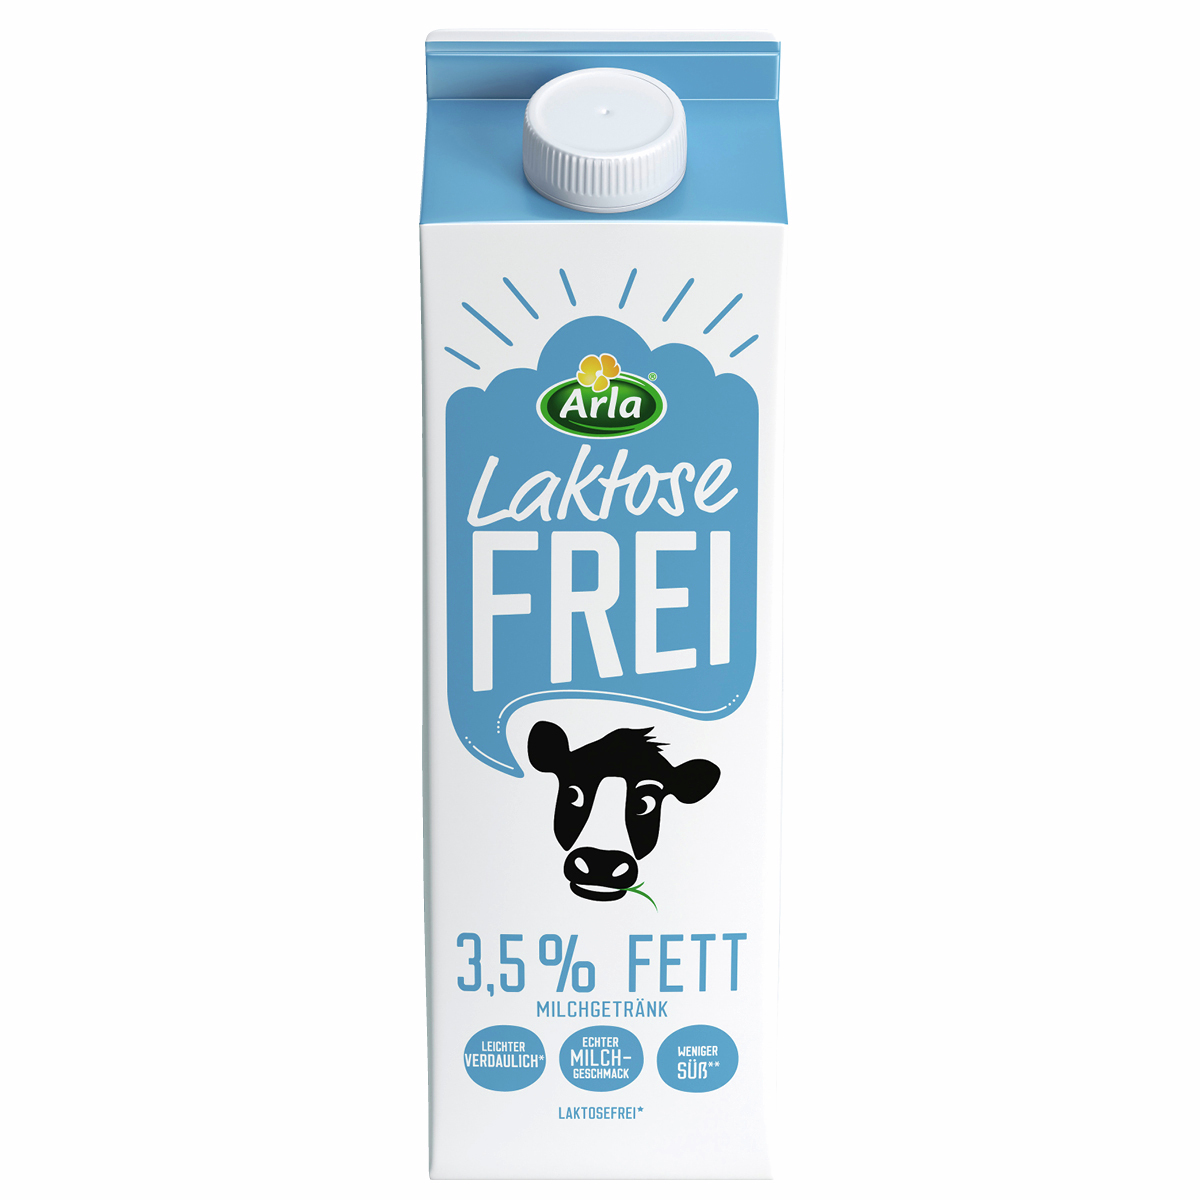 Arla LactoFree Laktosefreie Milch 3,5% 1l